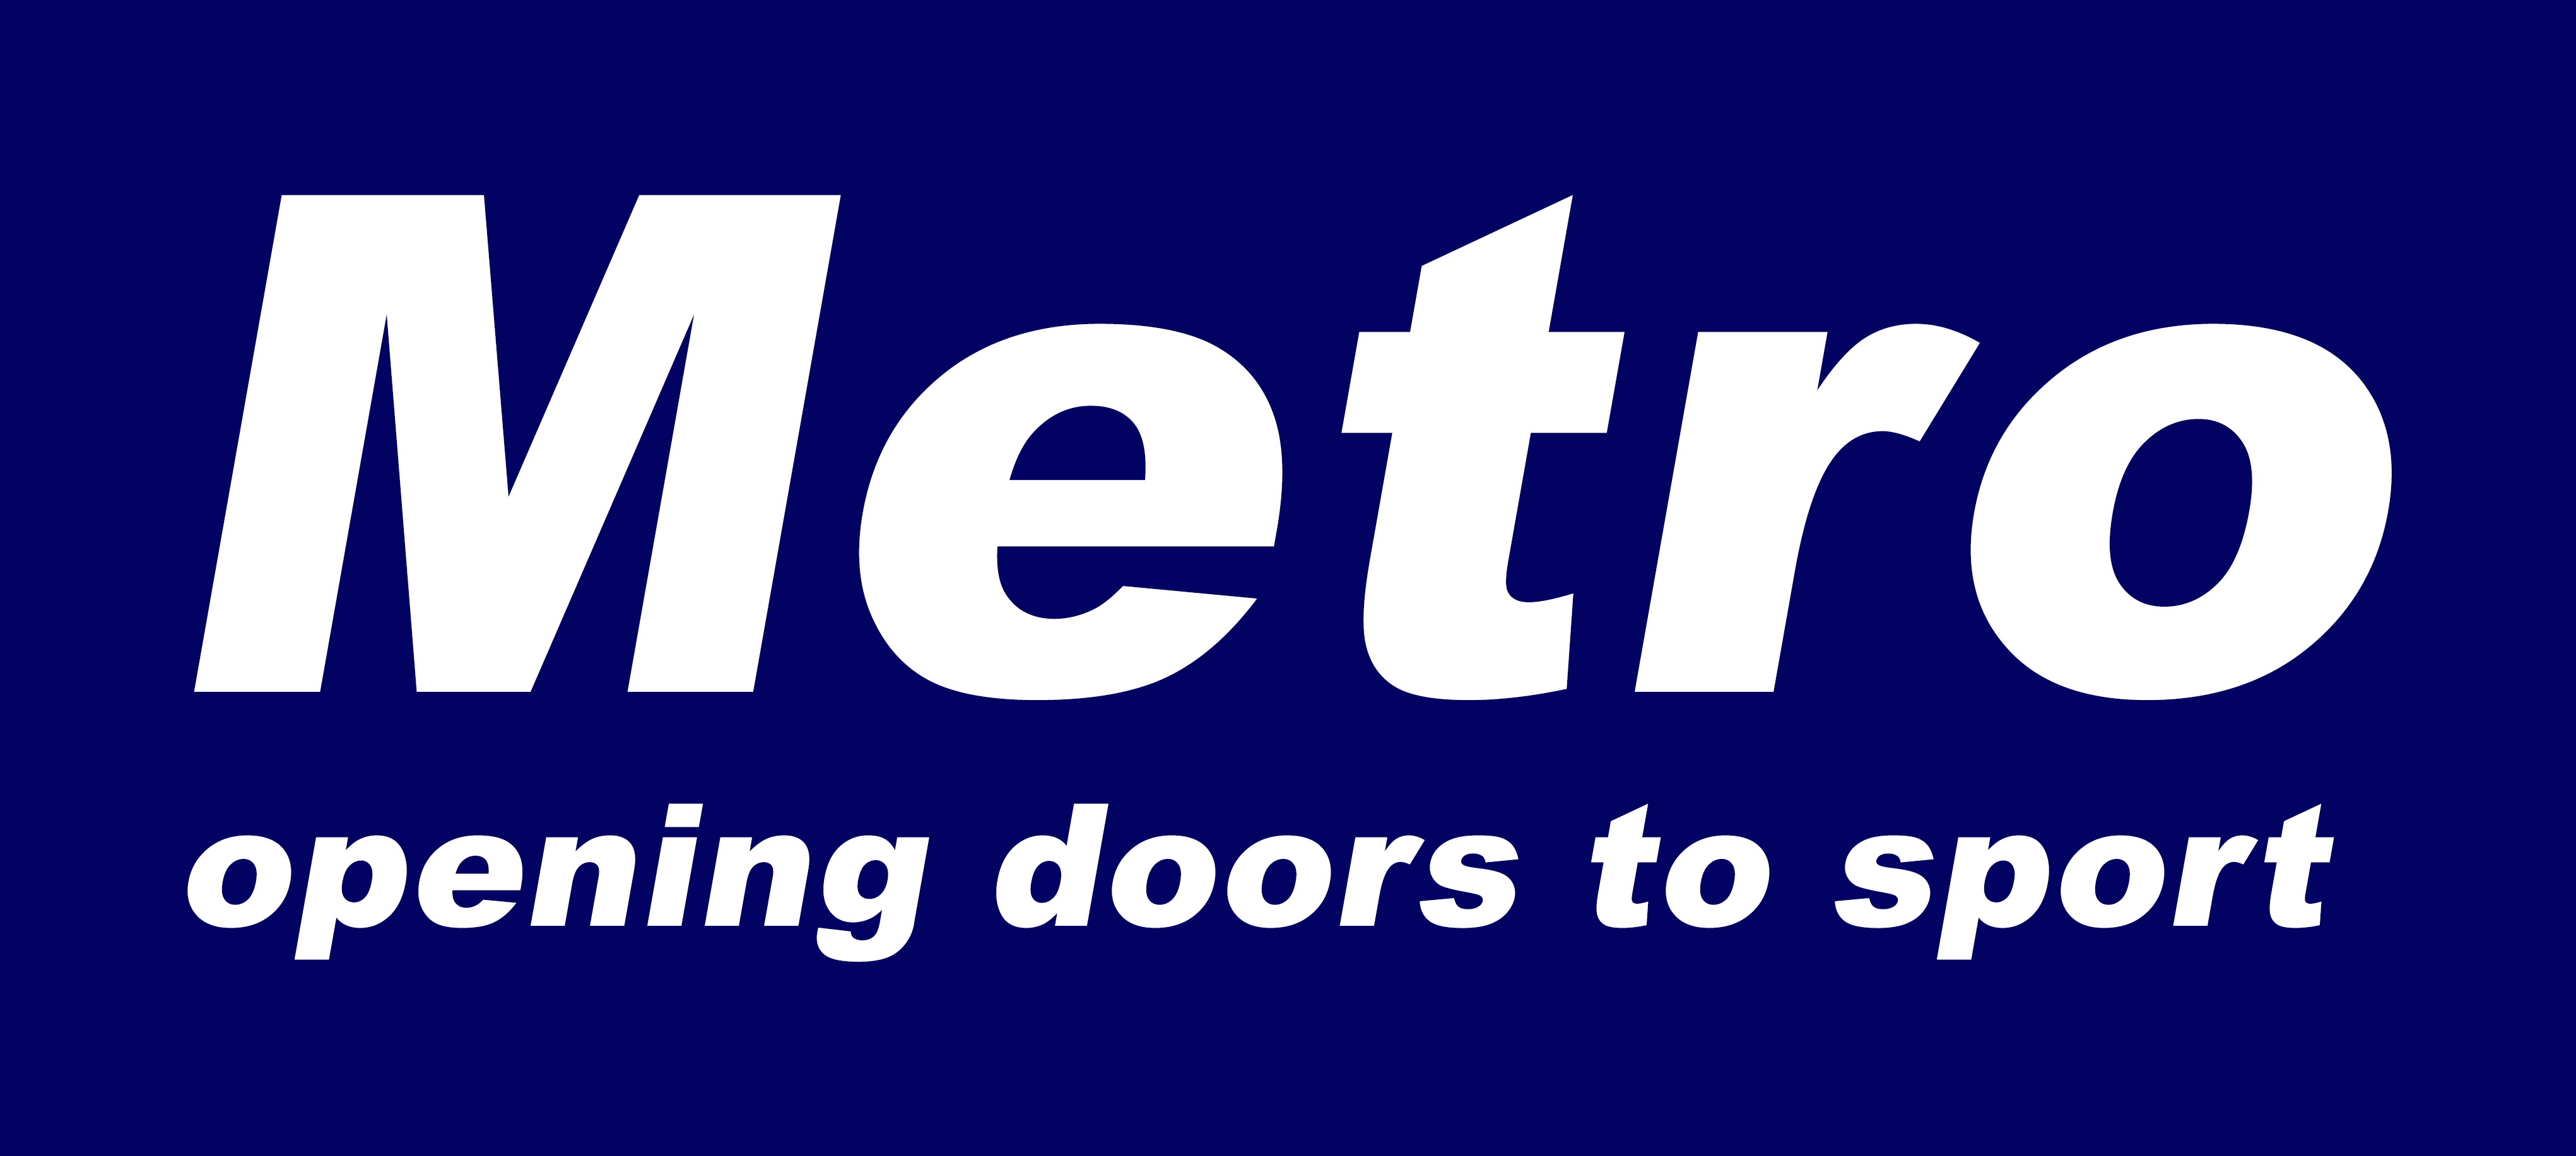 White and Blue Sports Logo - Metro Blind Sport logo - Thomas Pocklington Trust